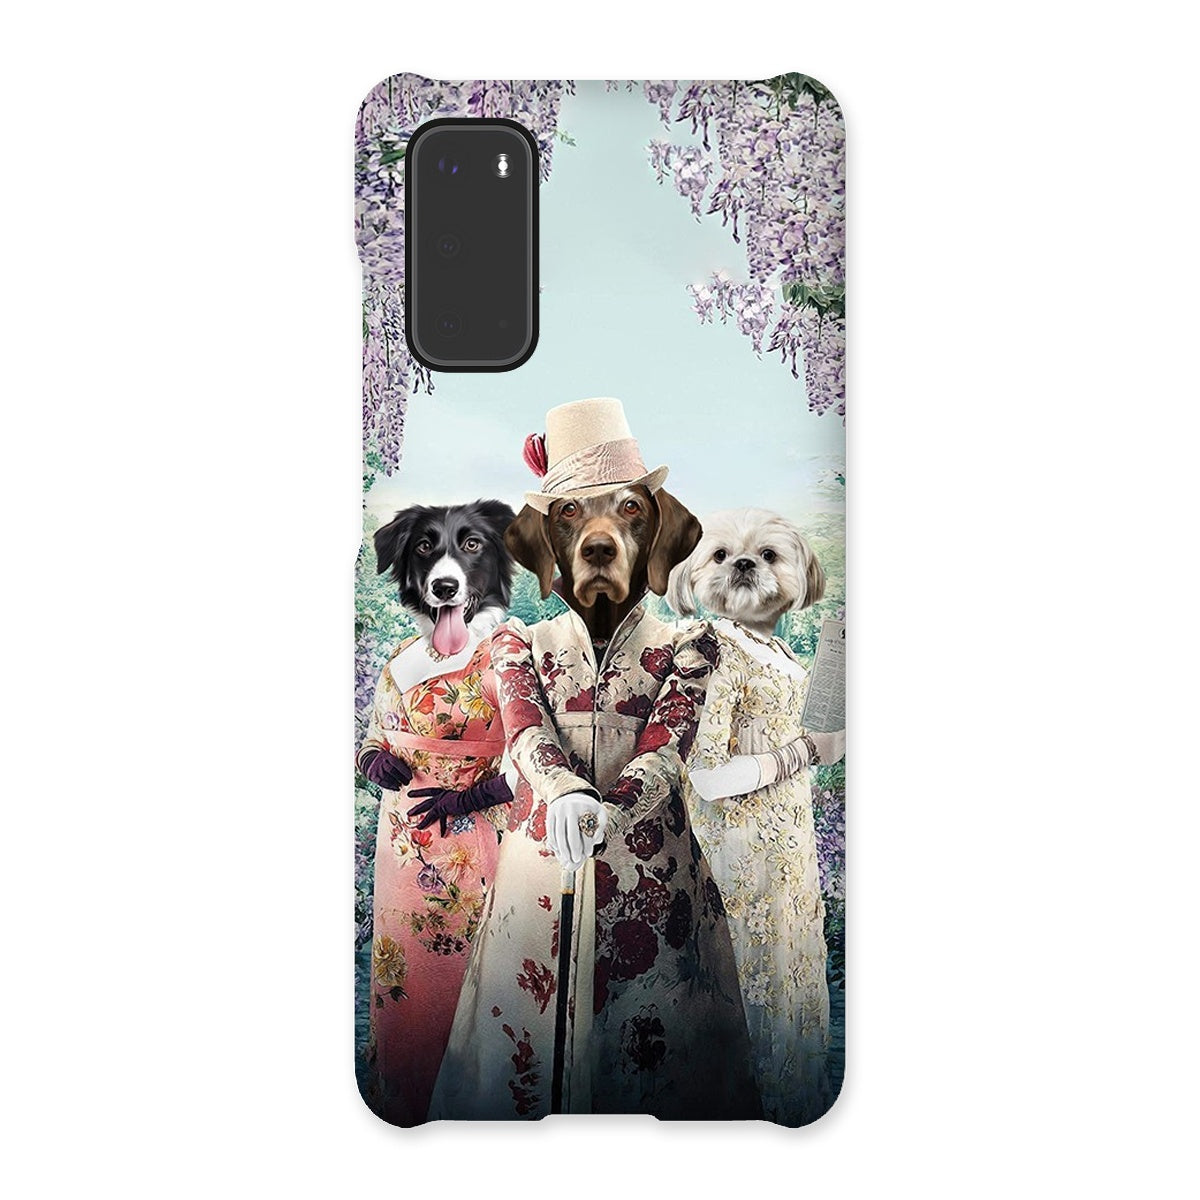 Paw & Glory, pawandglory, phone case dog, personalized pet phone case, custom dog phone case, pet art phone case uk, pet portrait phone case,